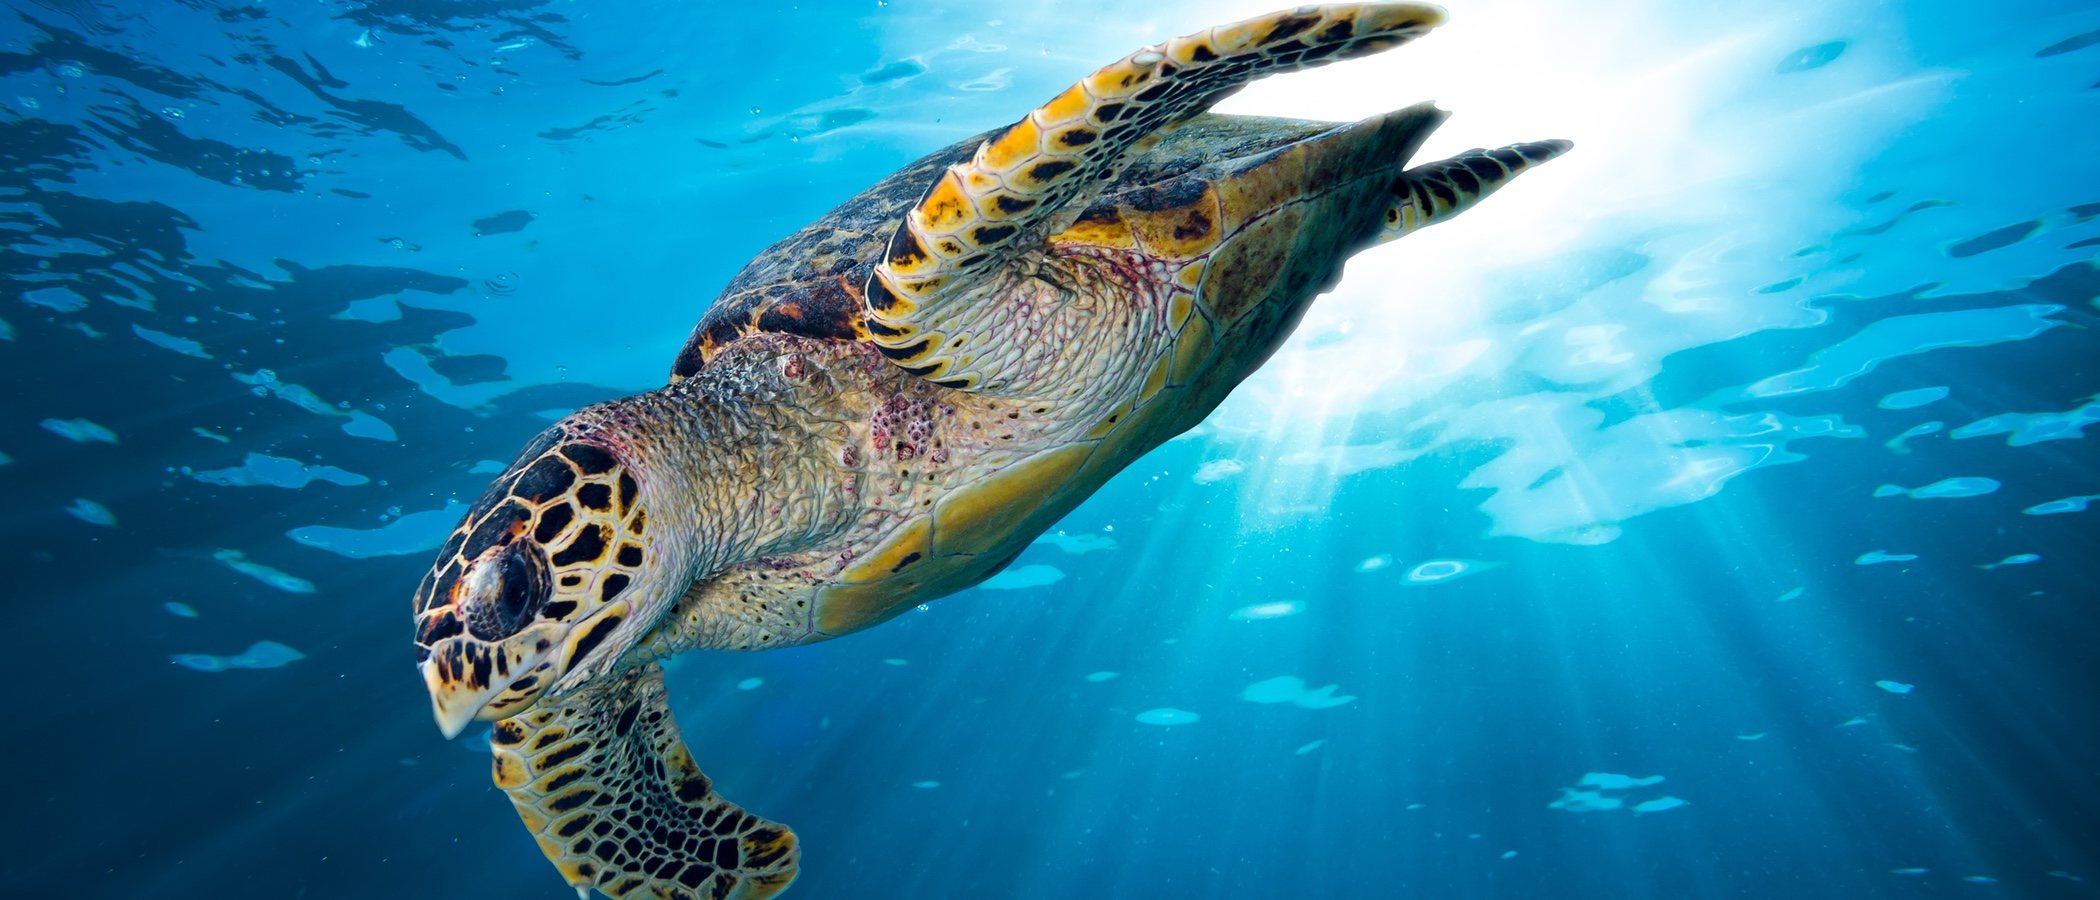 Descubre 15 curiosidades sobre las tortugas